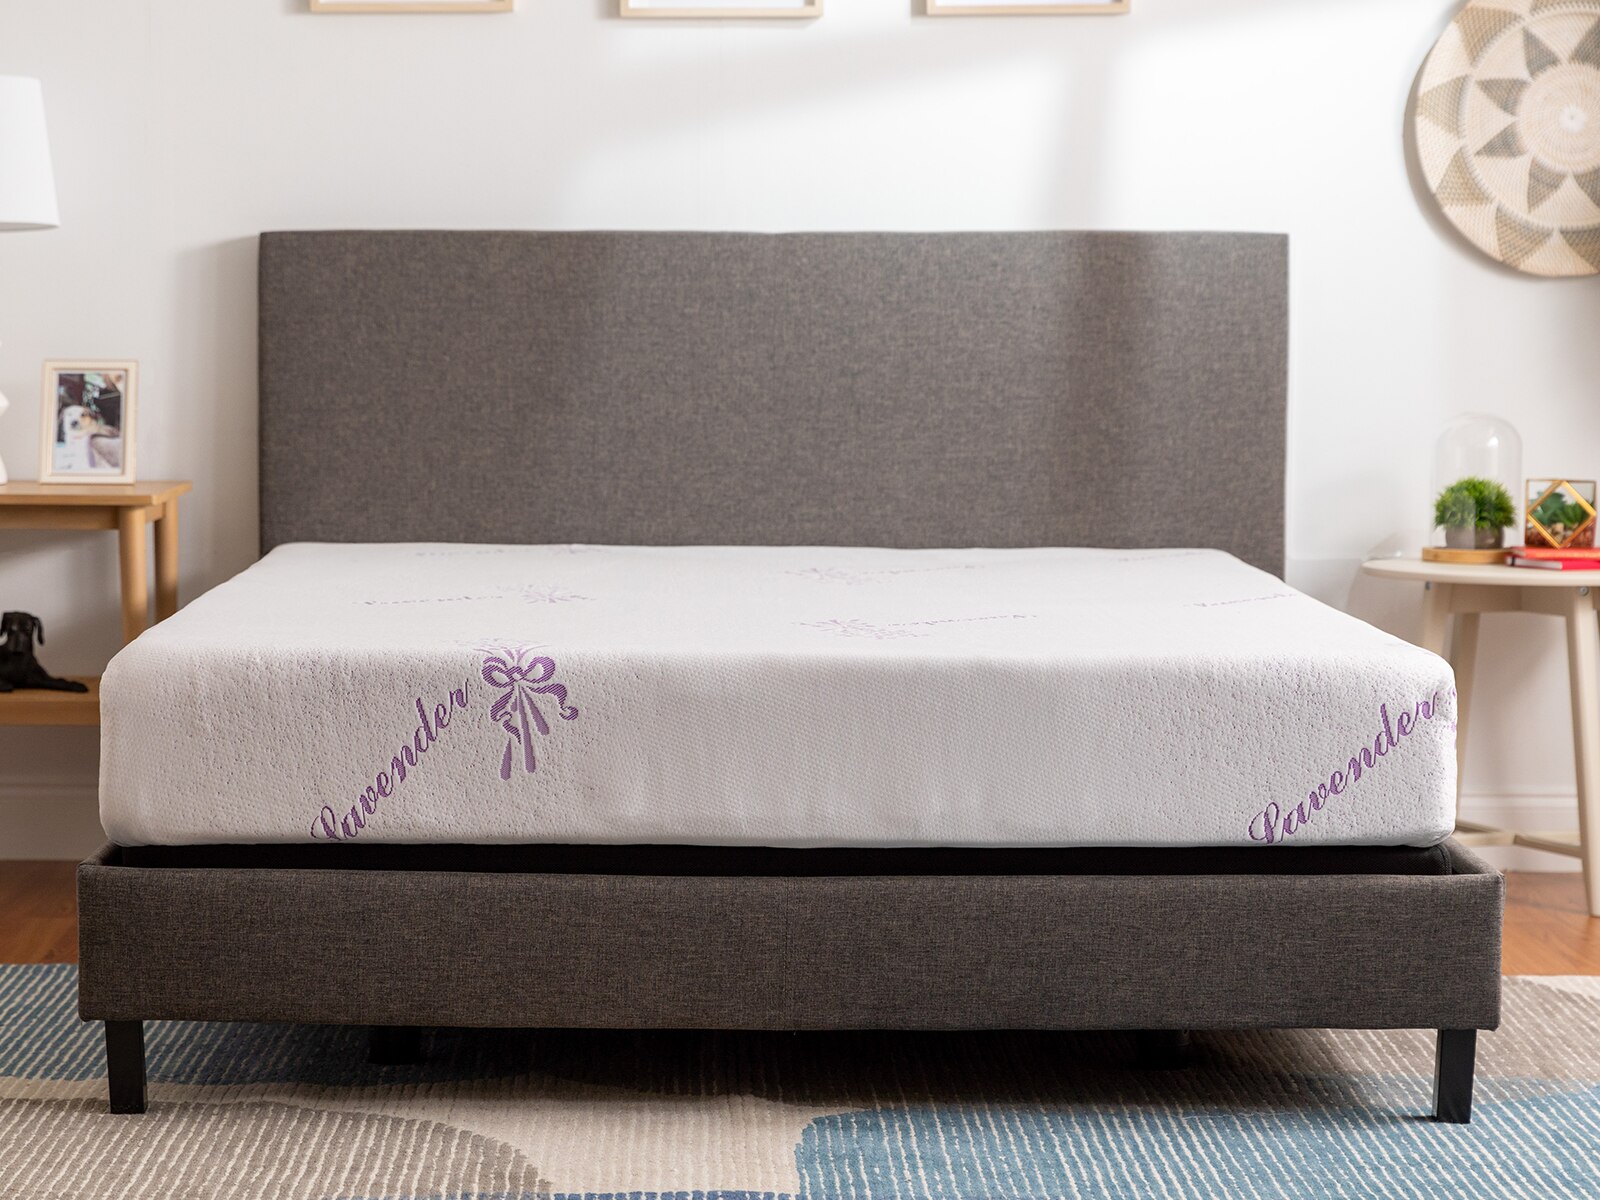 gel vs lavender mattress cover